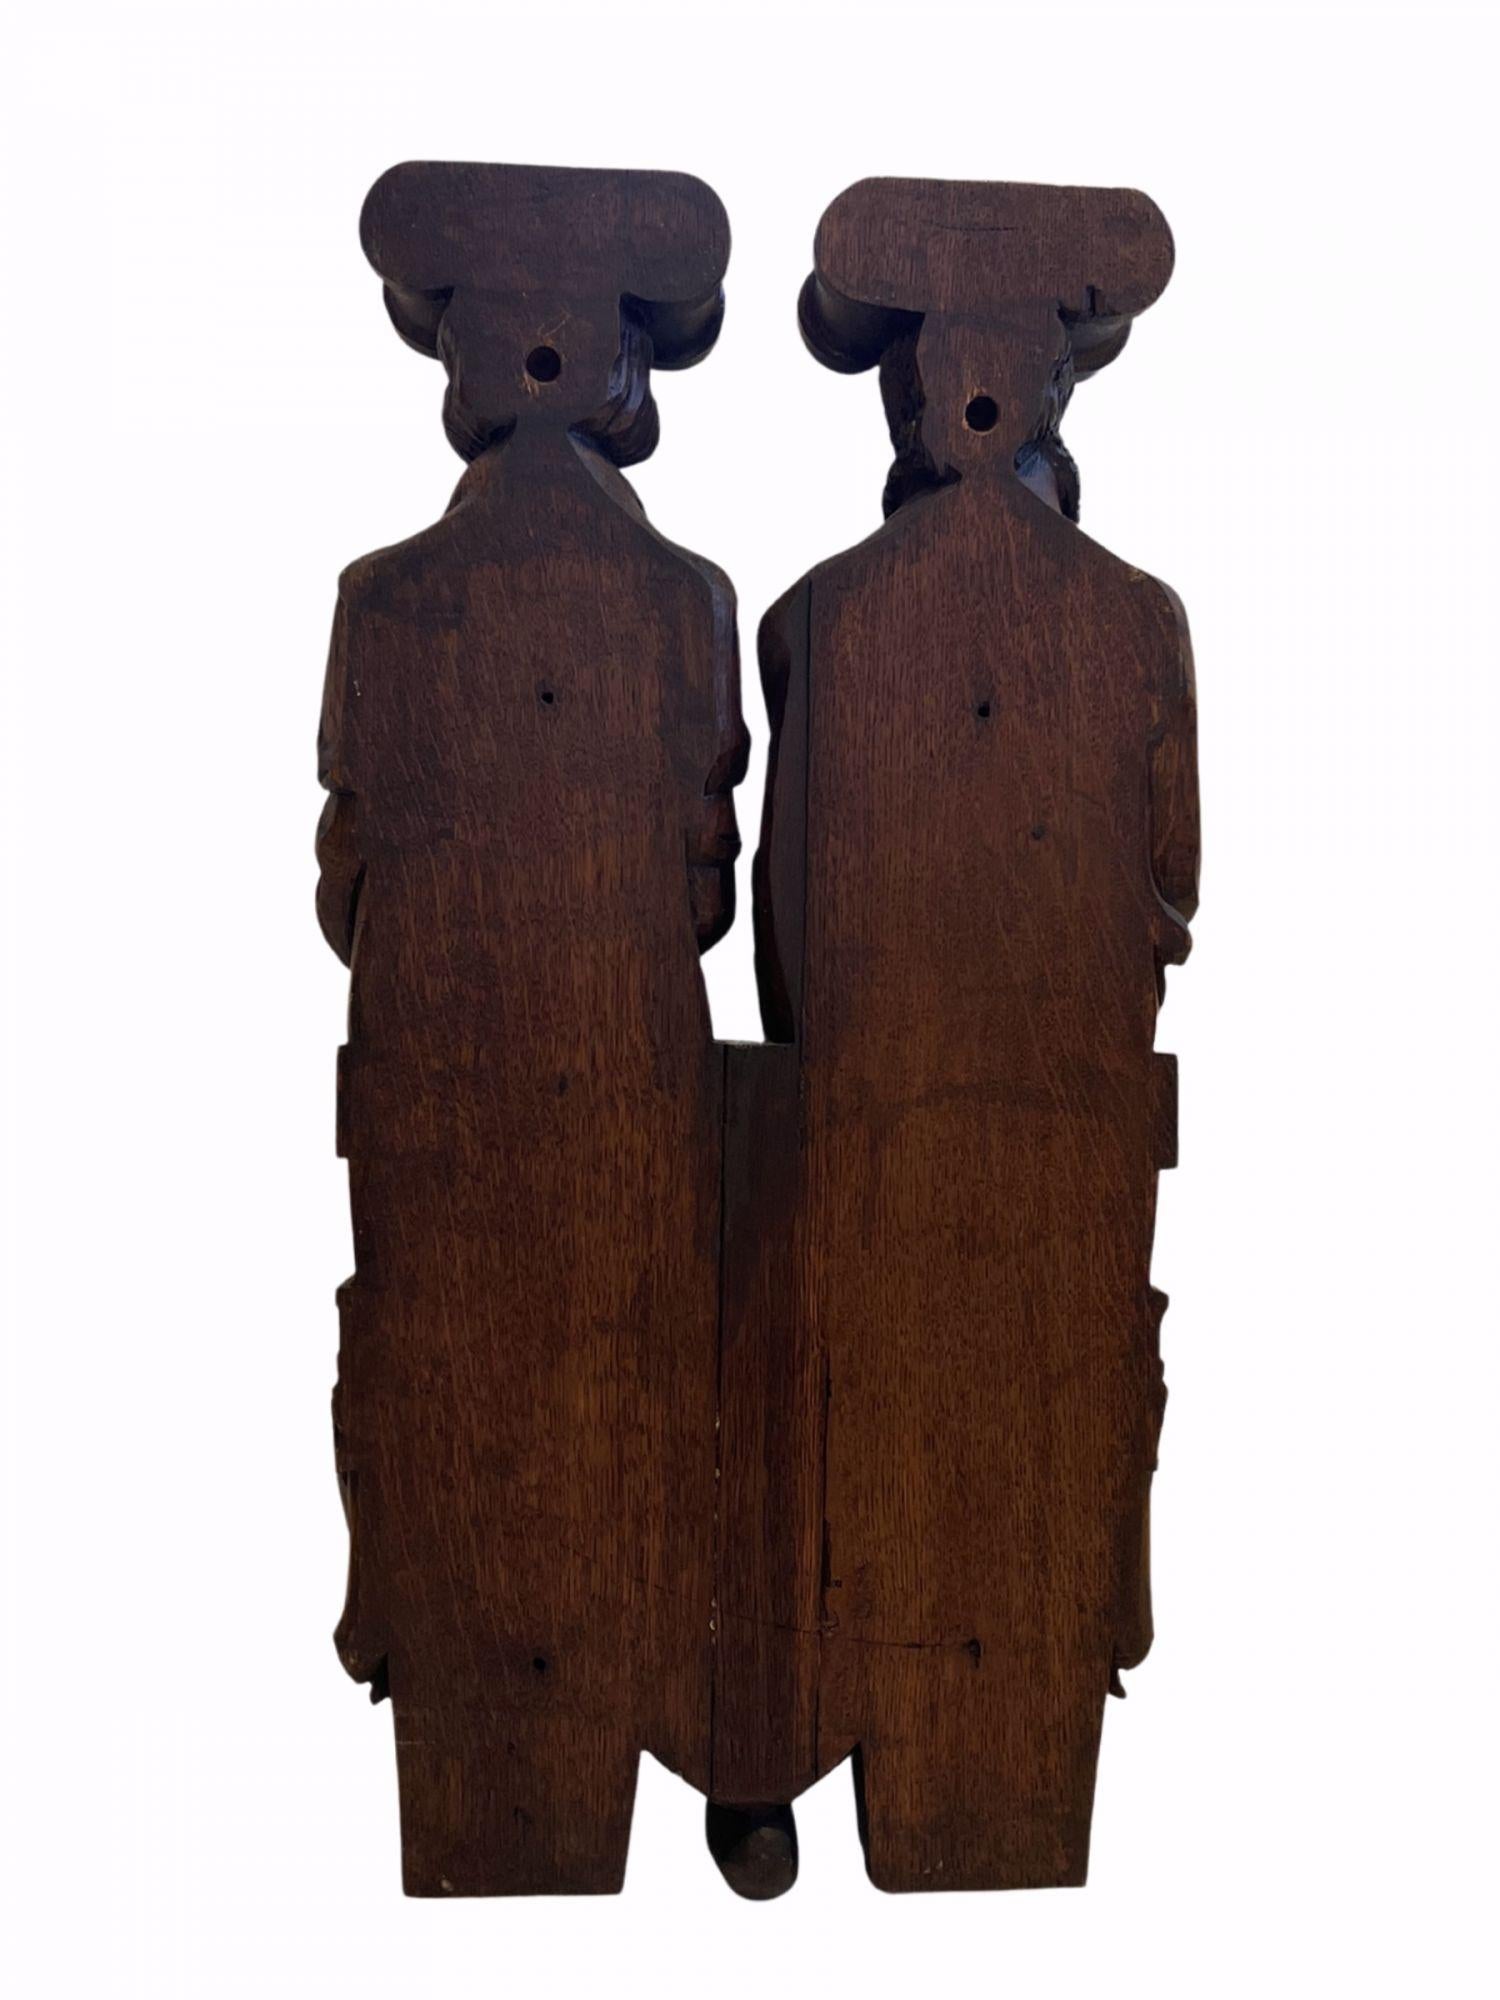 Early 19th Century Pair of German Oak Caryatidal Figures Depicting Historicism For Sale 10